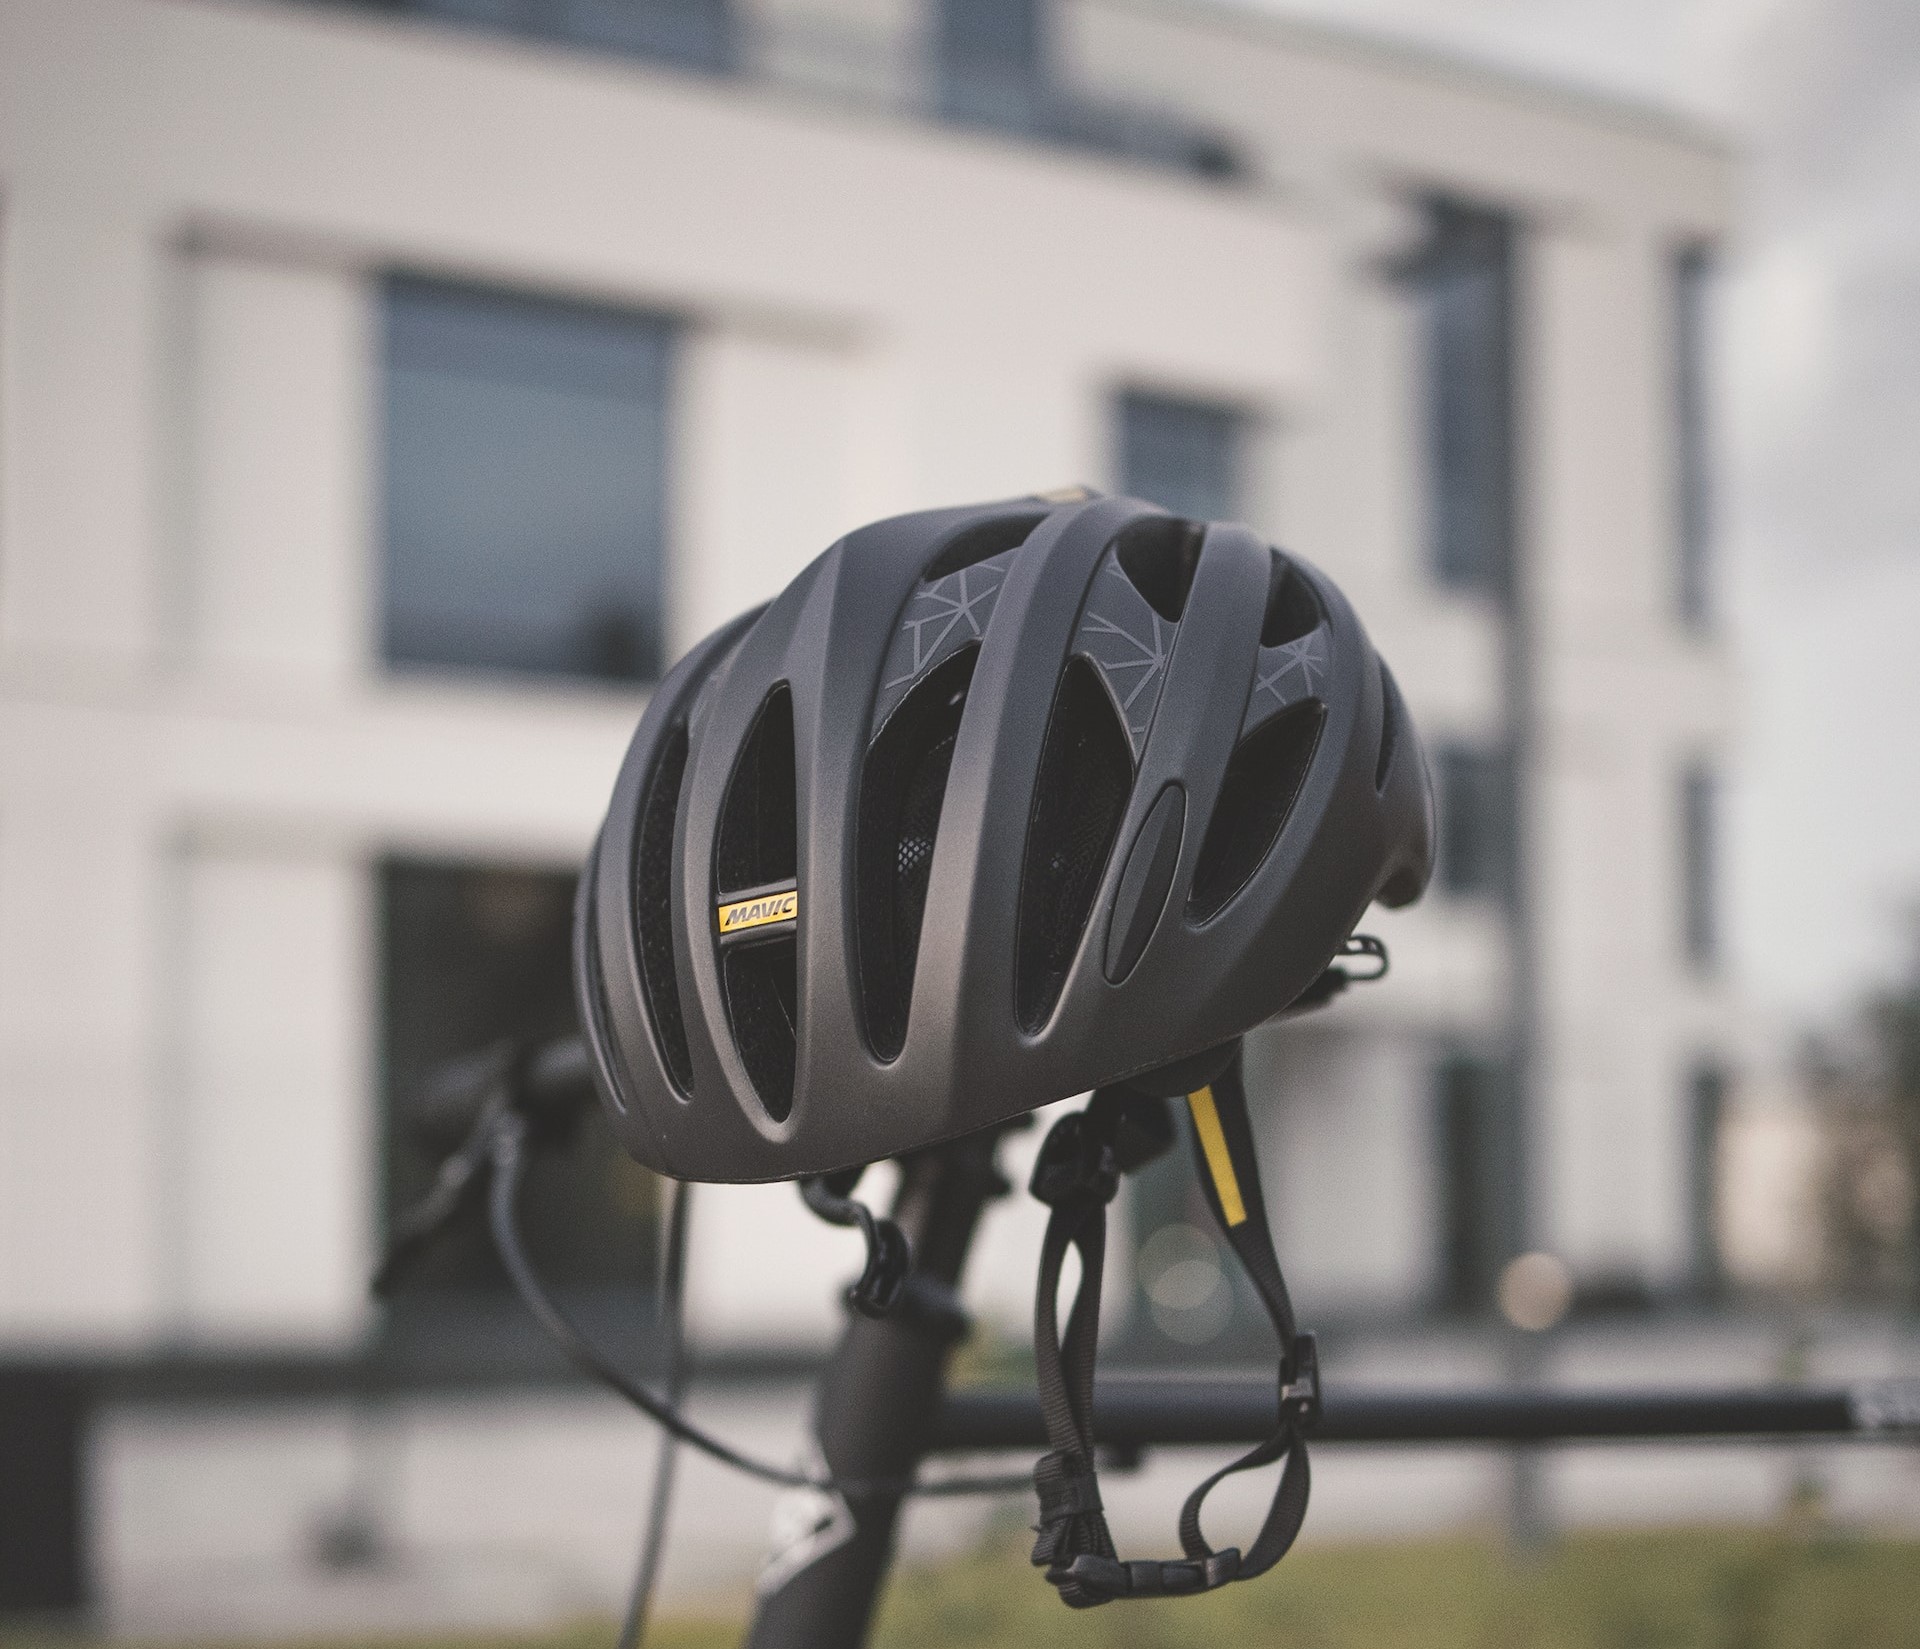 cycling helmet resting on handlebars